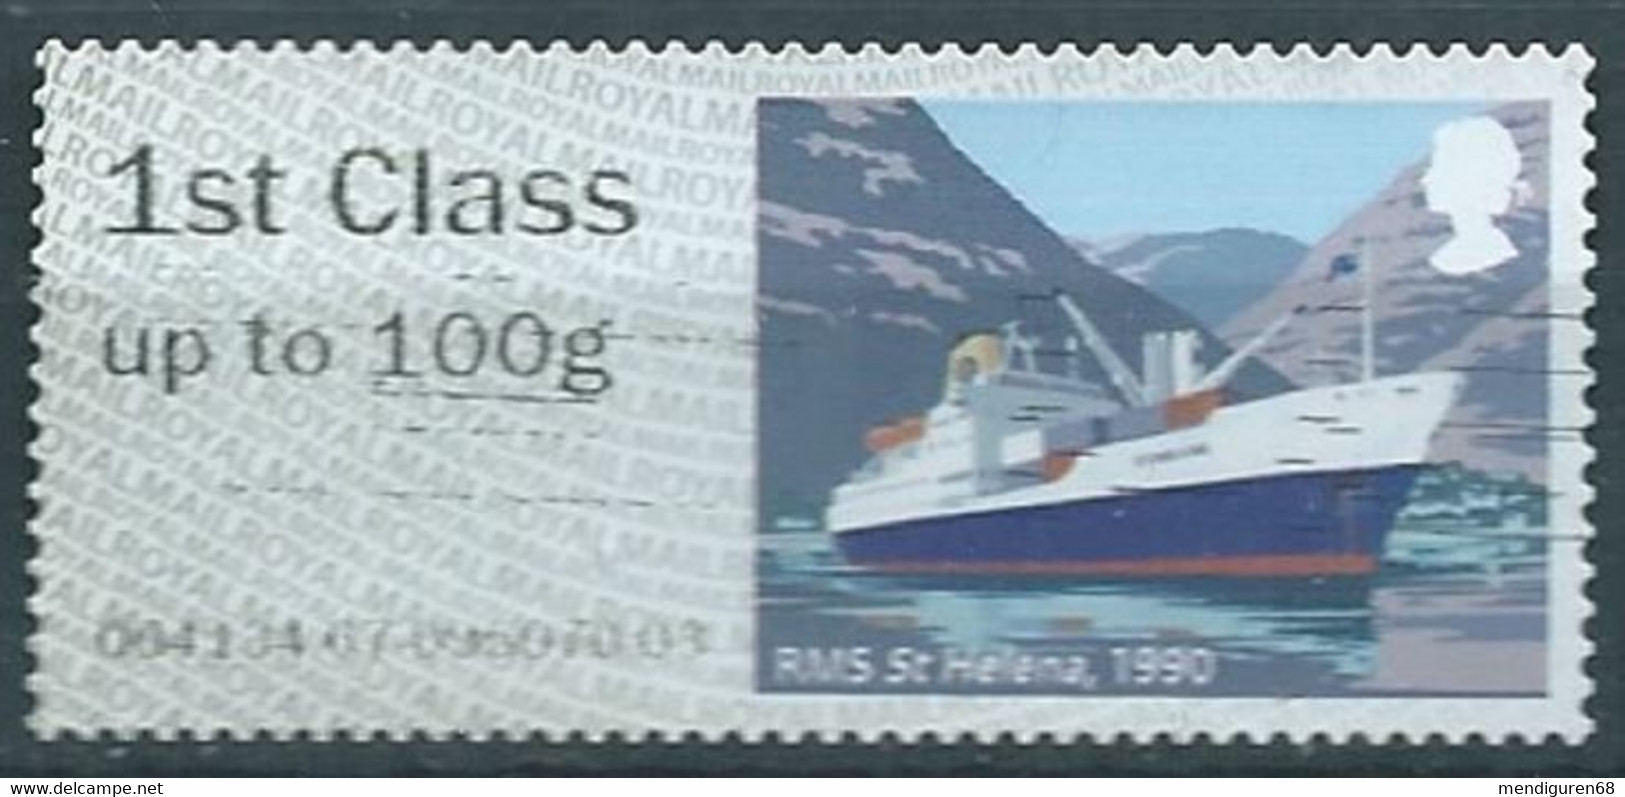 GROSBRITANNIEN GRANDE BRETAGNE GB 2018 POST&GO HERITAGE MAIL BY SEA:RMS ST HELENA FC Upto 100g SG FS212 MI AT144 YT D143 - Post & Go Stamps